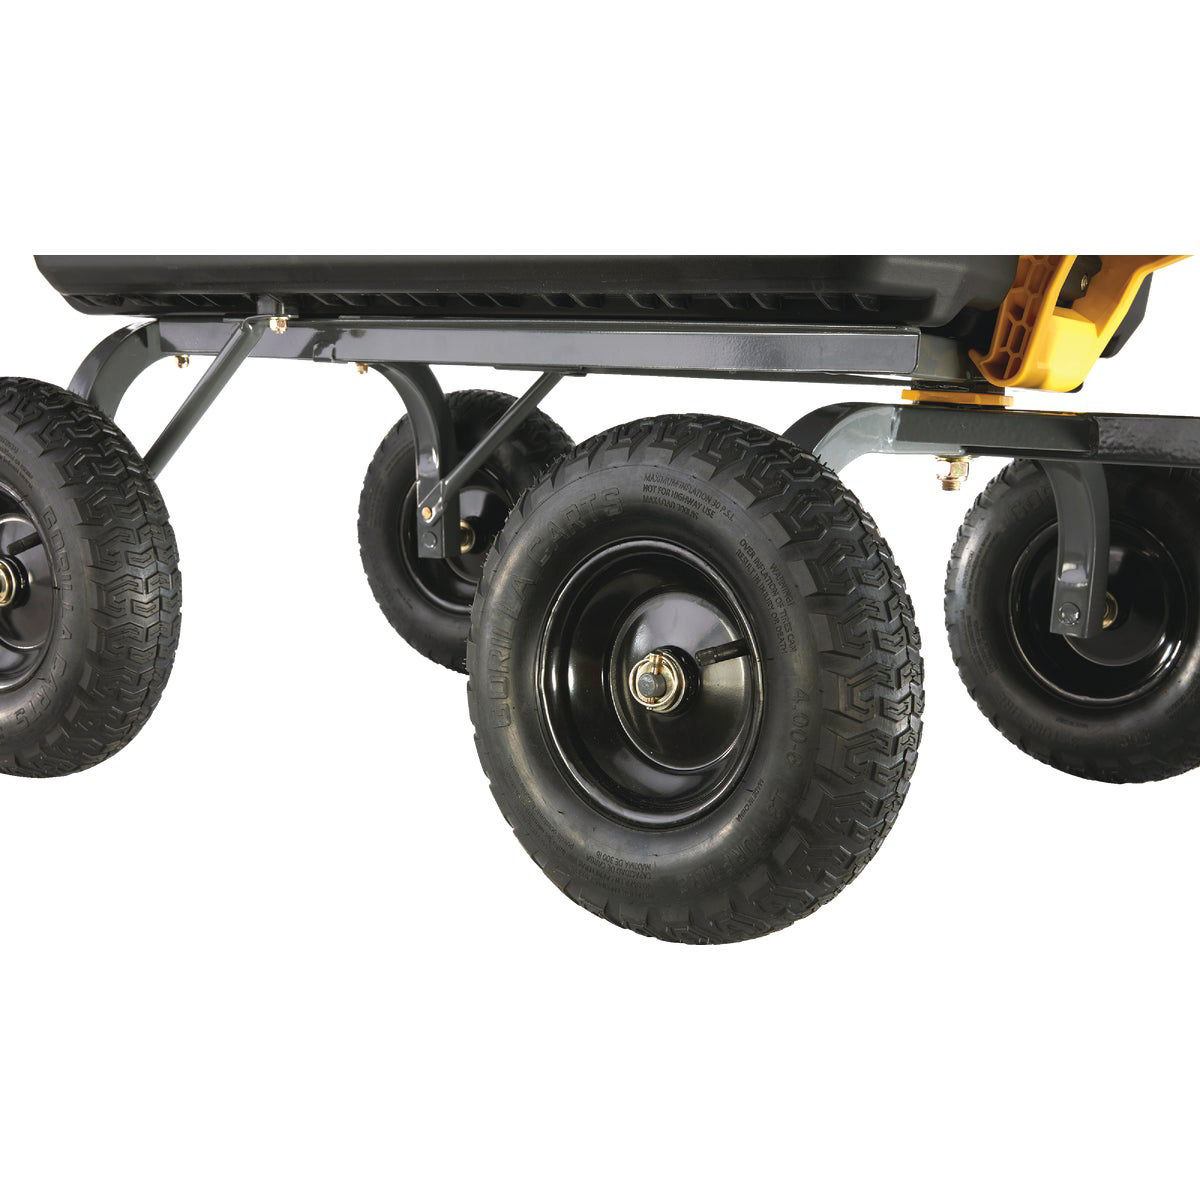 Gorilla Carts Steel Utility Cart, 9 Cubic Feet Garden Wagon with